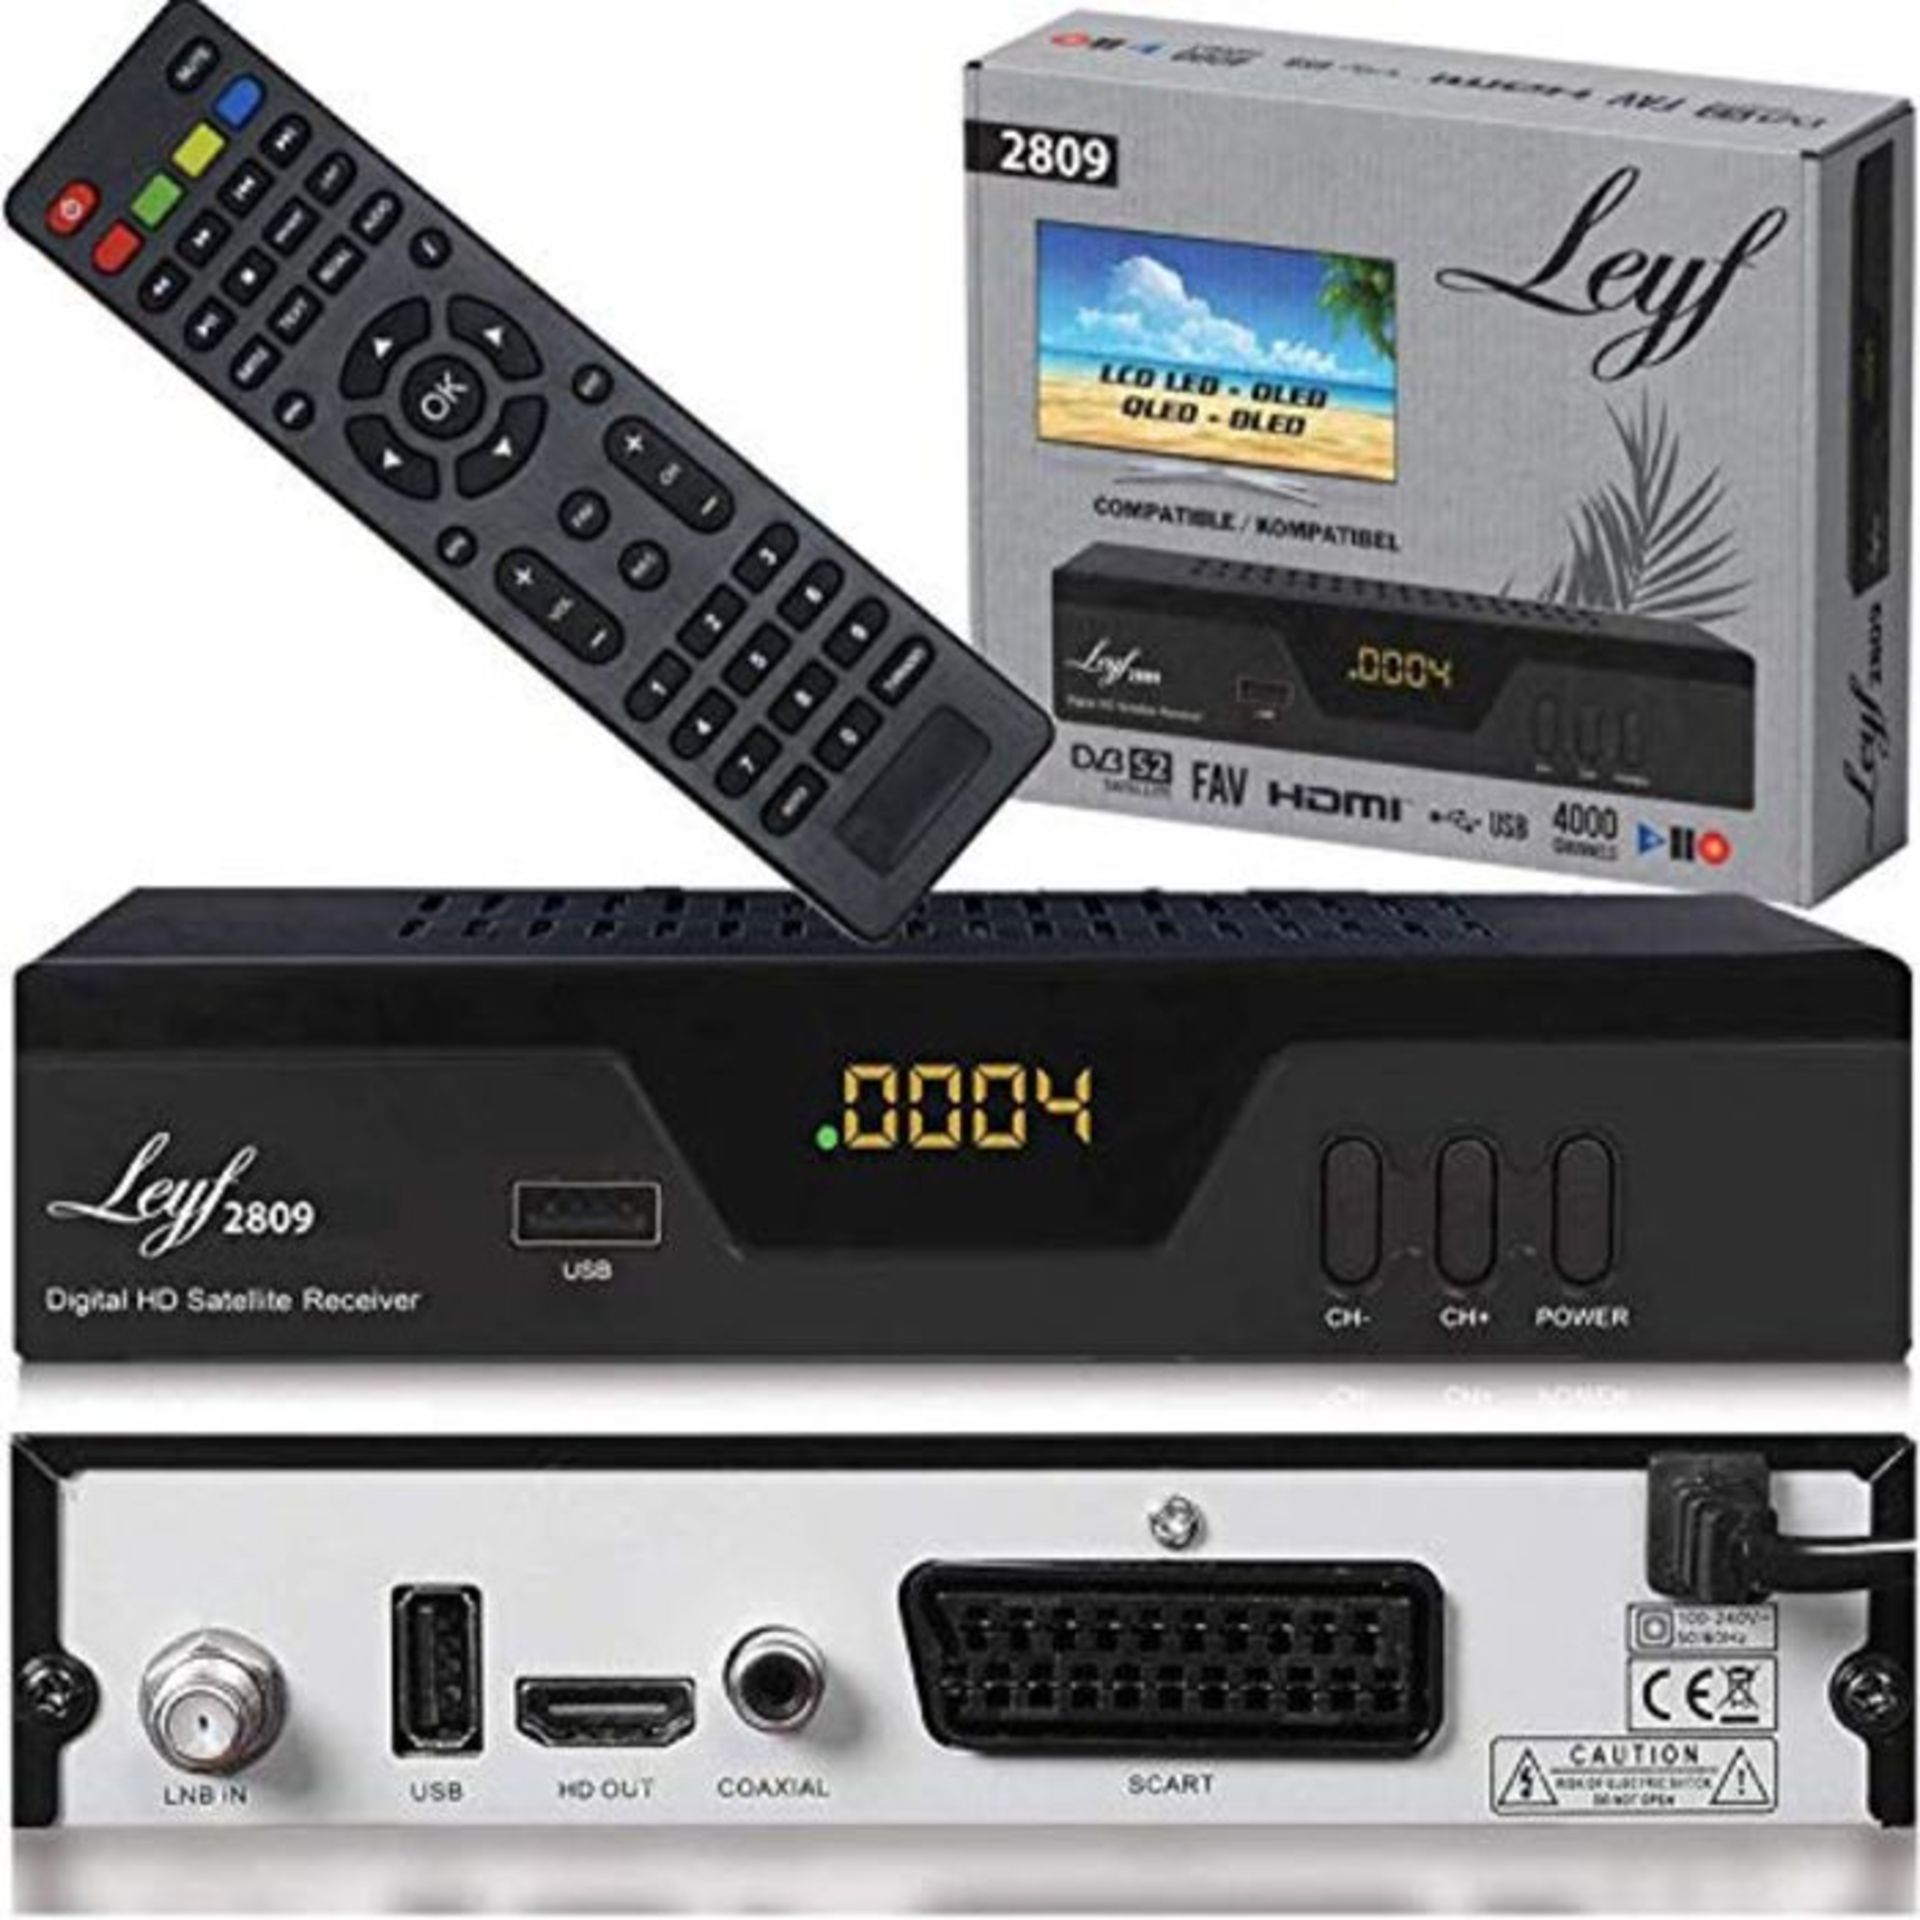 Leyf 2809 Digital Satellite Receiver (HDTV, DVB-S/S2, HDMI, SCART, 2x USB 2.0, Full HD